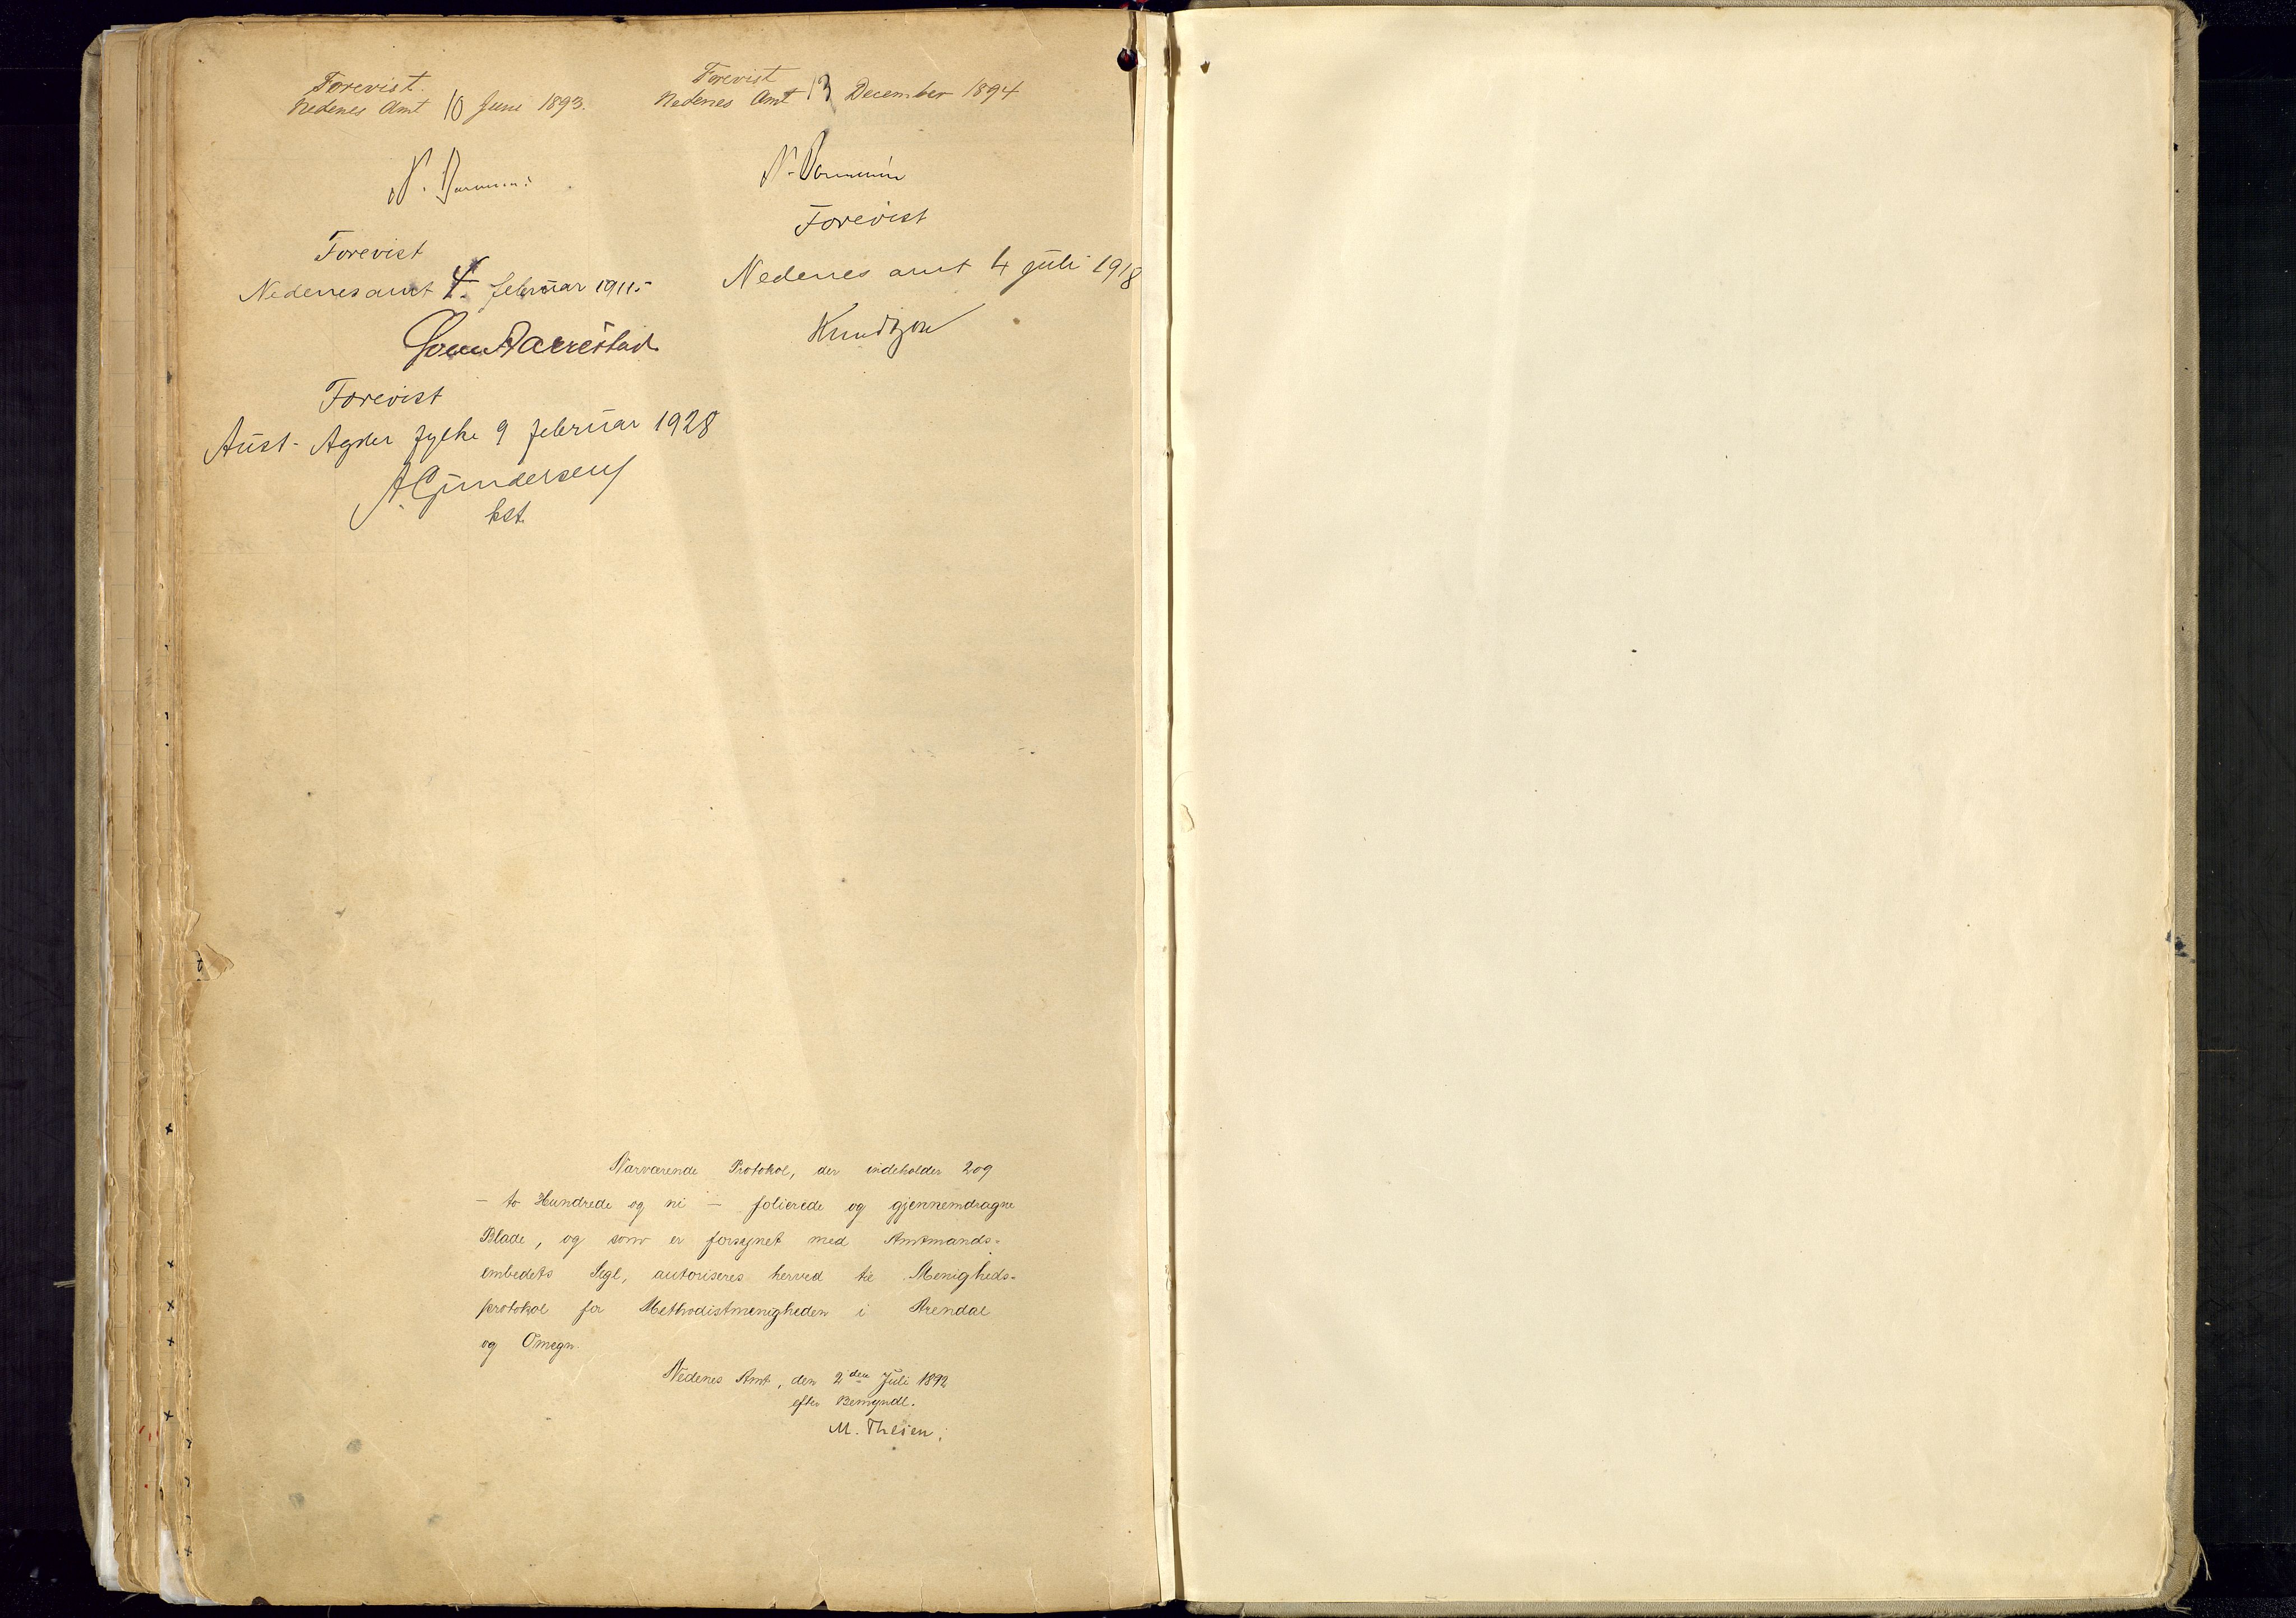 Metodistmenigheten, Arendal, SAK/1292-0011/F/Fa/L0005: Dissenter register no. 5, 1892-1942